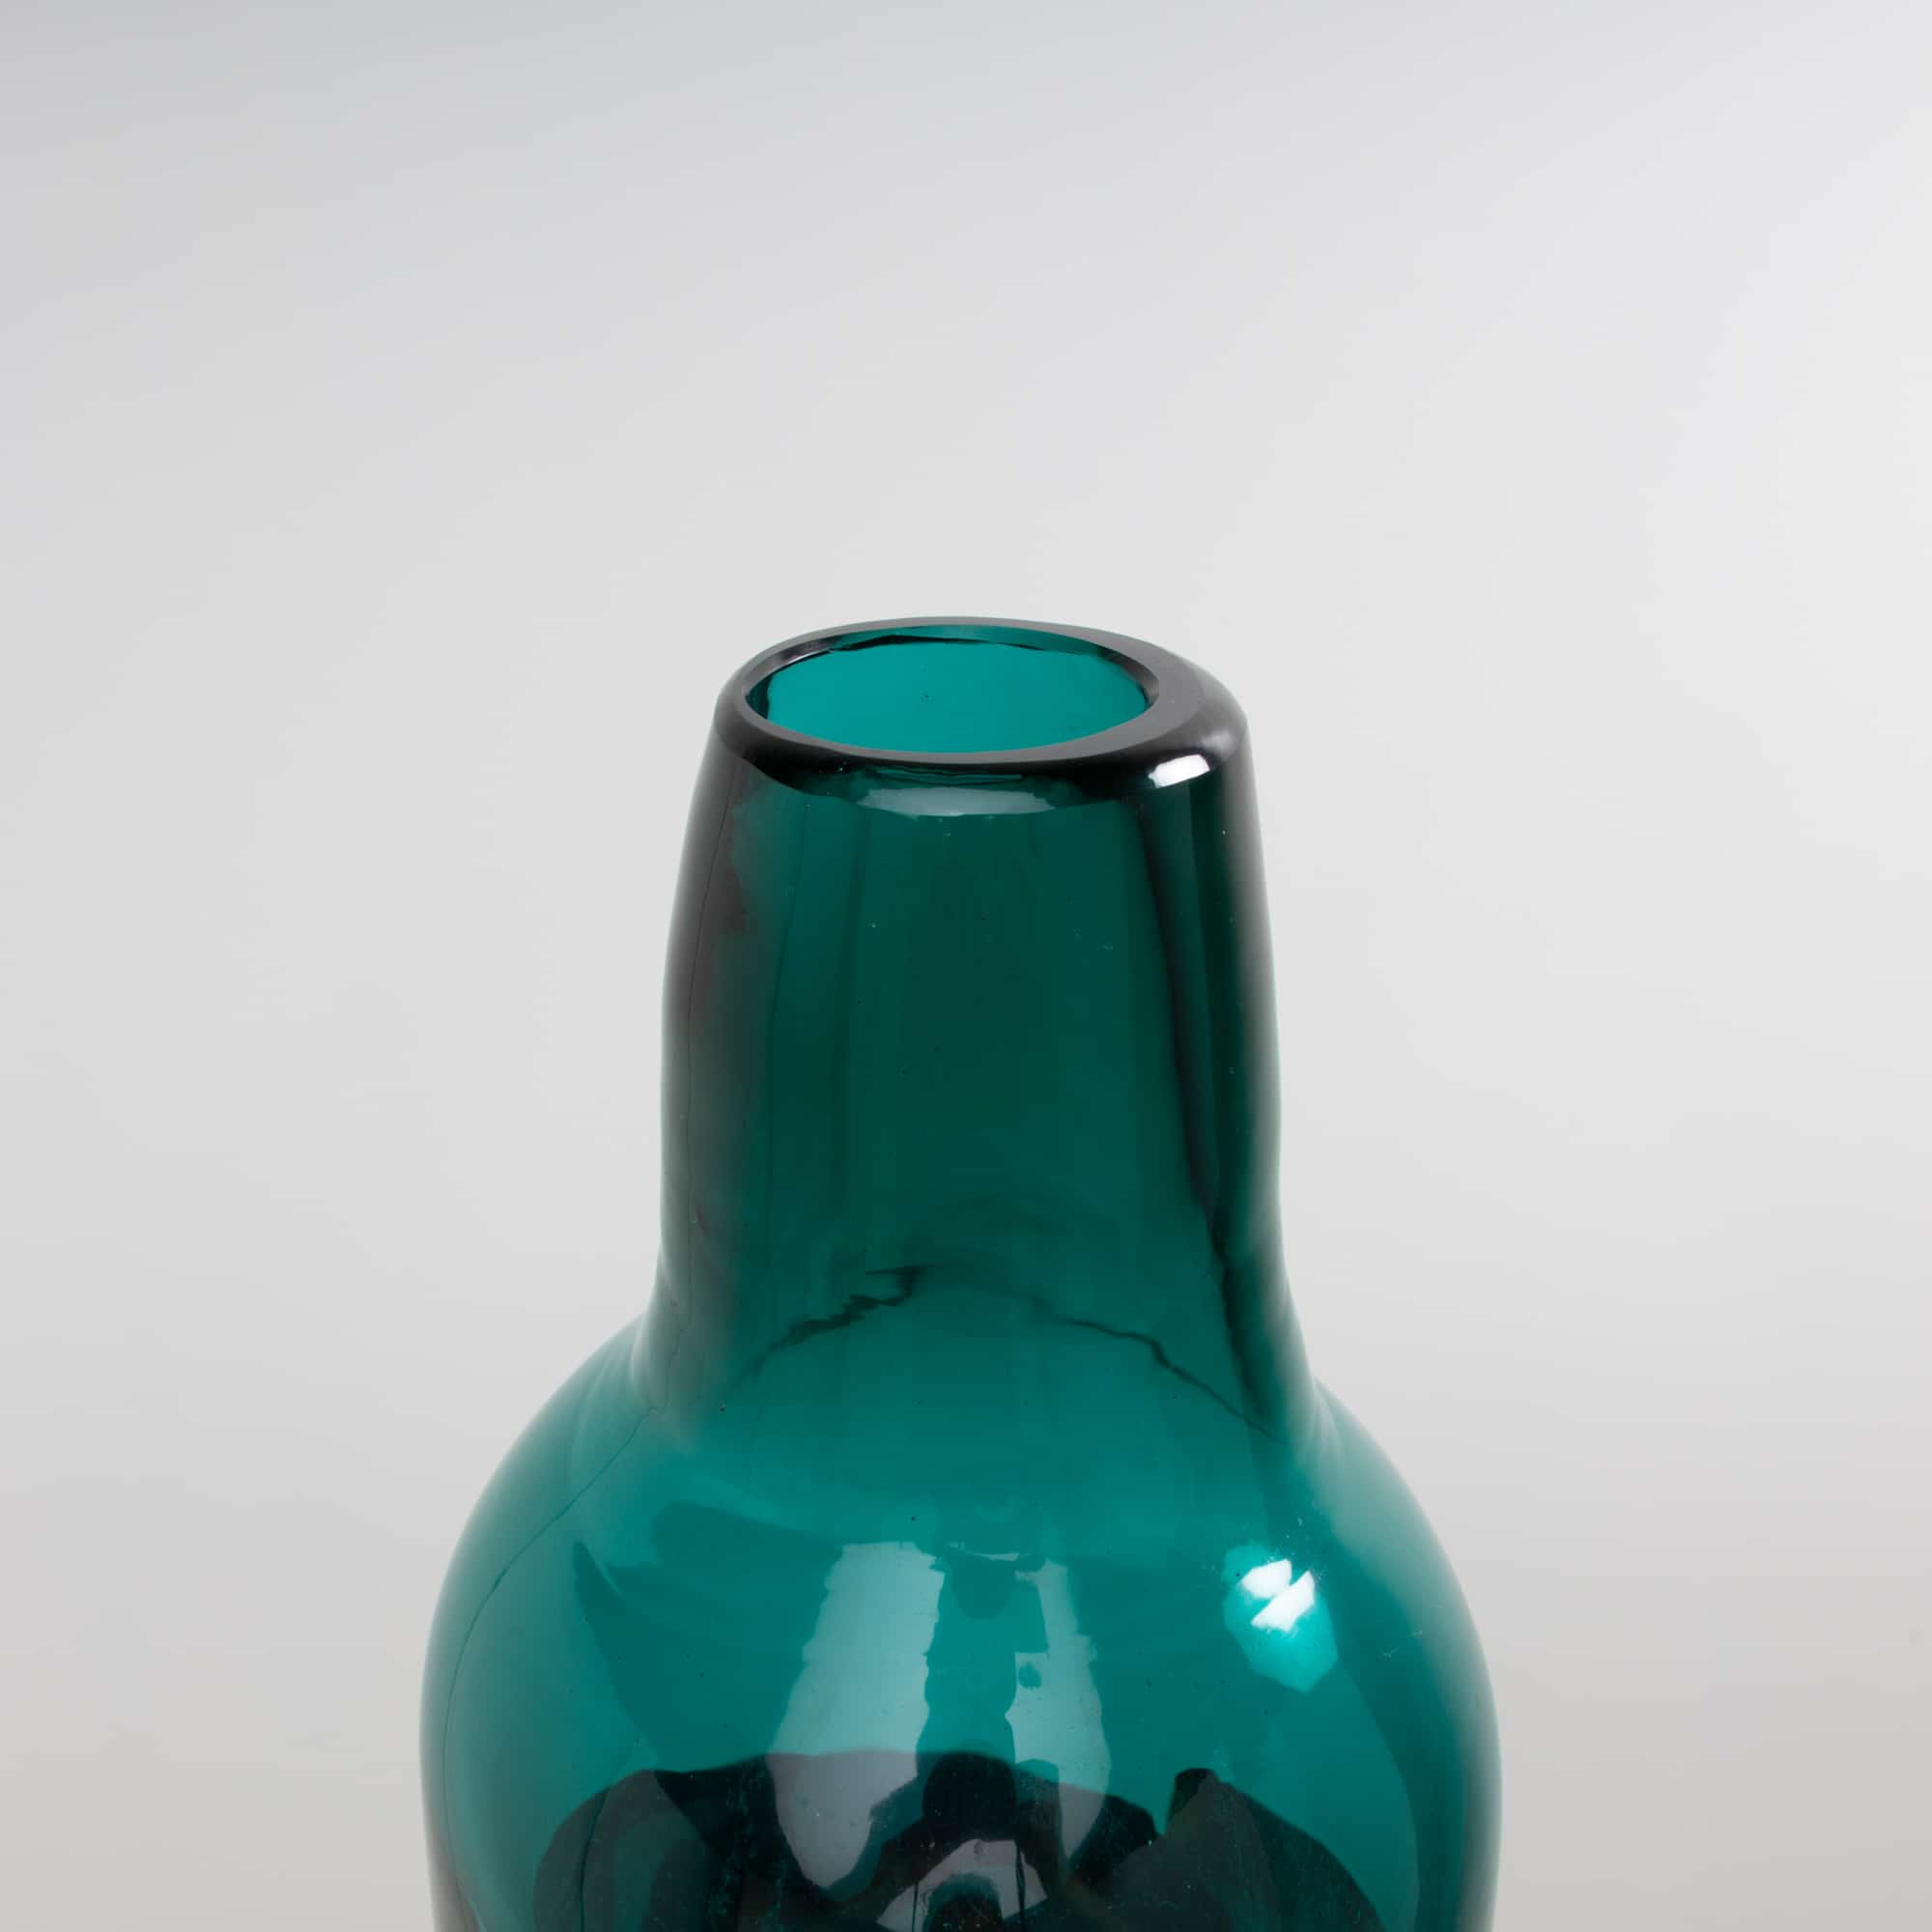 UE5_23 Fasce orizzontali green bottle with red band Fulvio Bianconi